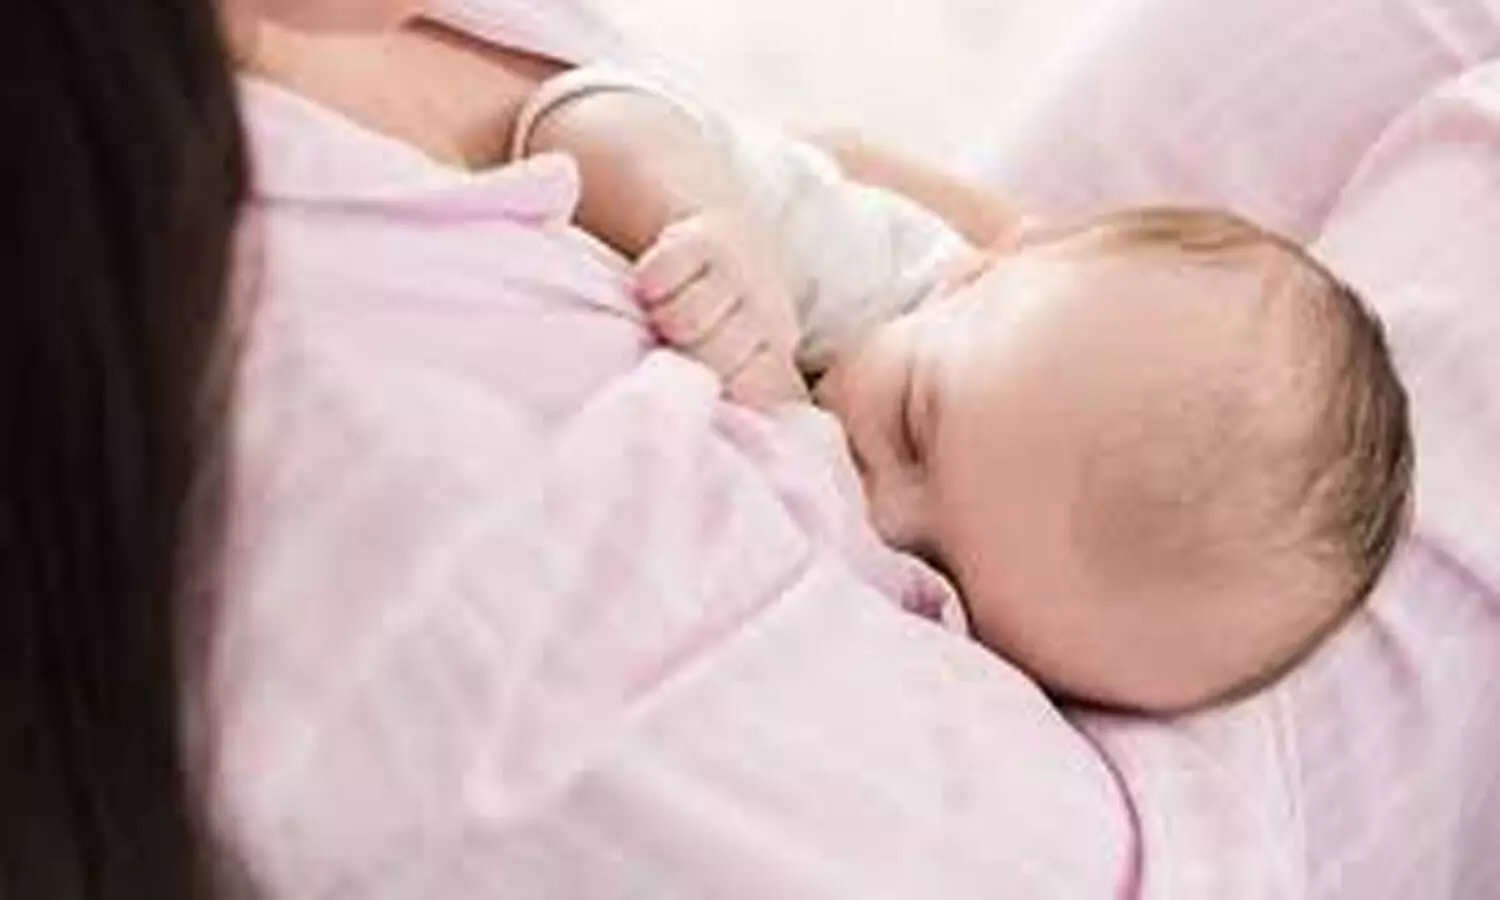 Breast milk may help prevent sepsis in premature infants